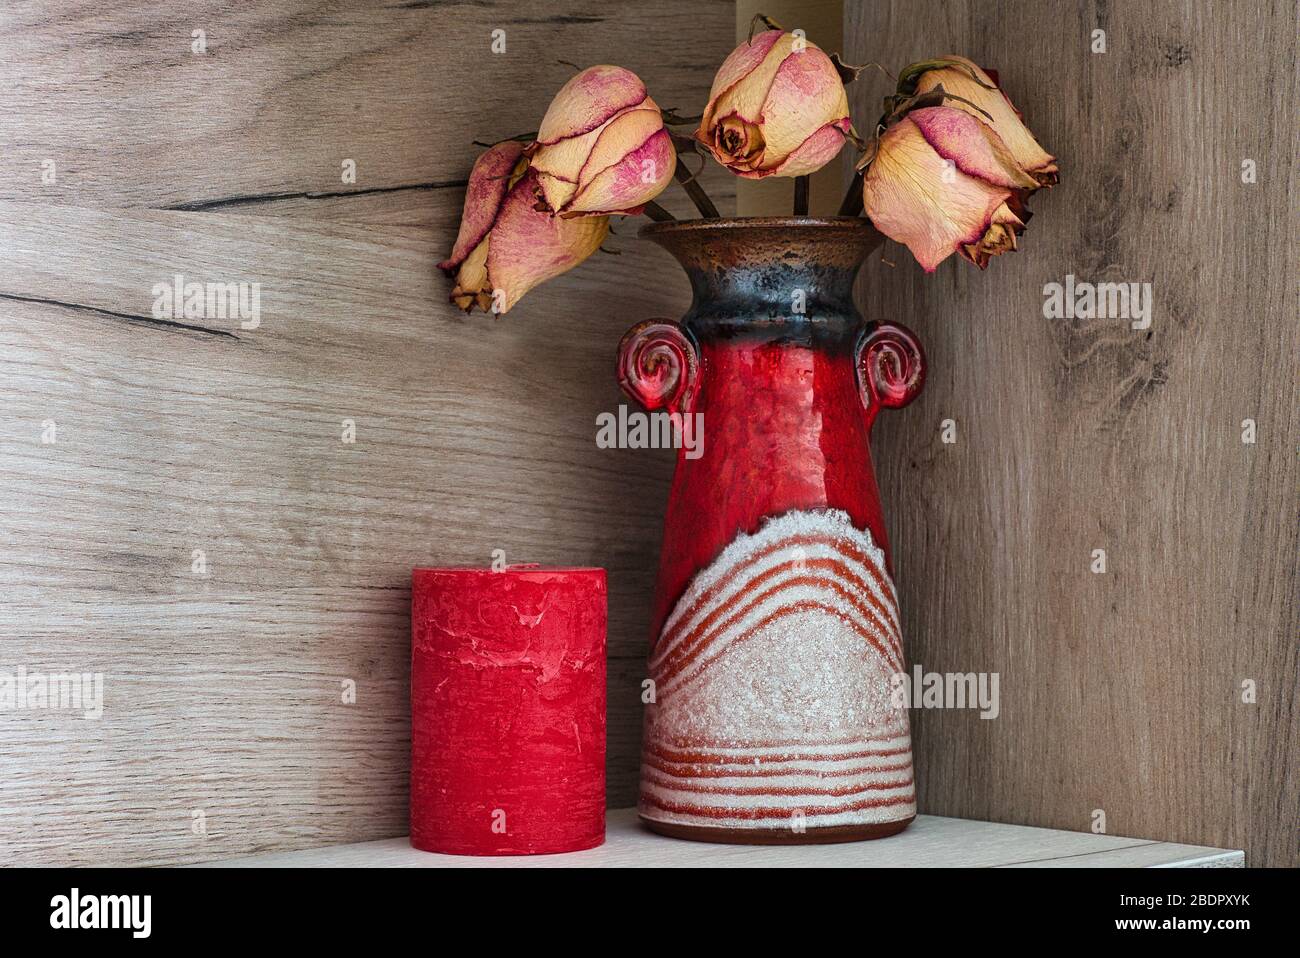 Rote Vase und Kerze Natur morte Bild in Pastellfarben, trockene Rosen Stockfoto